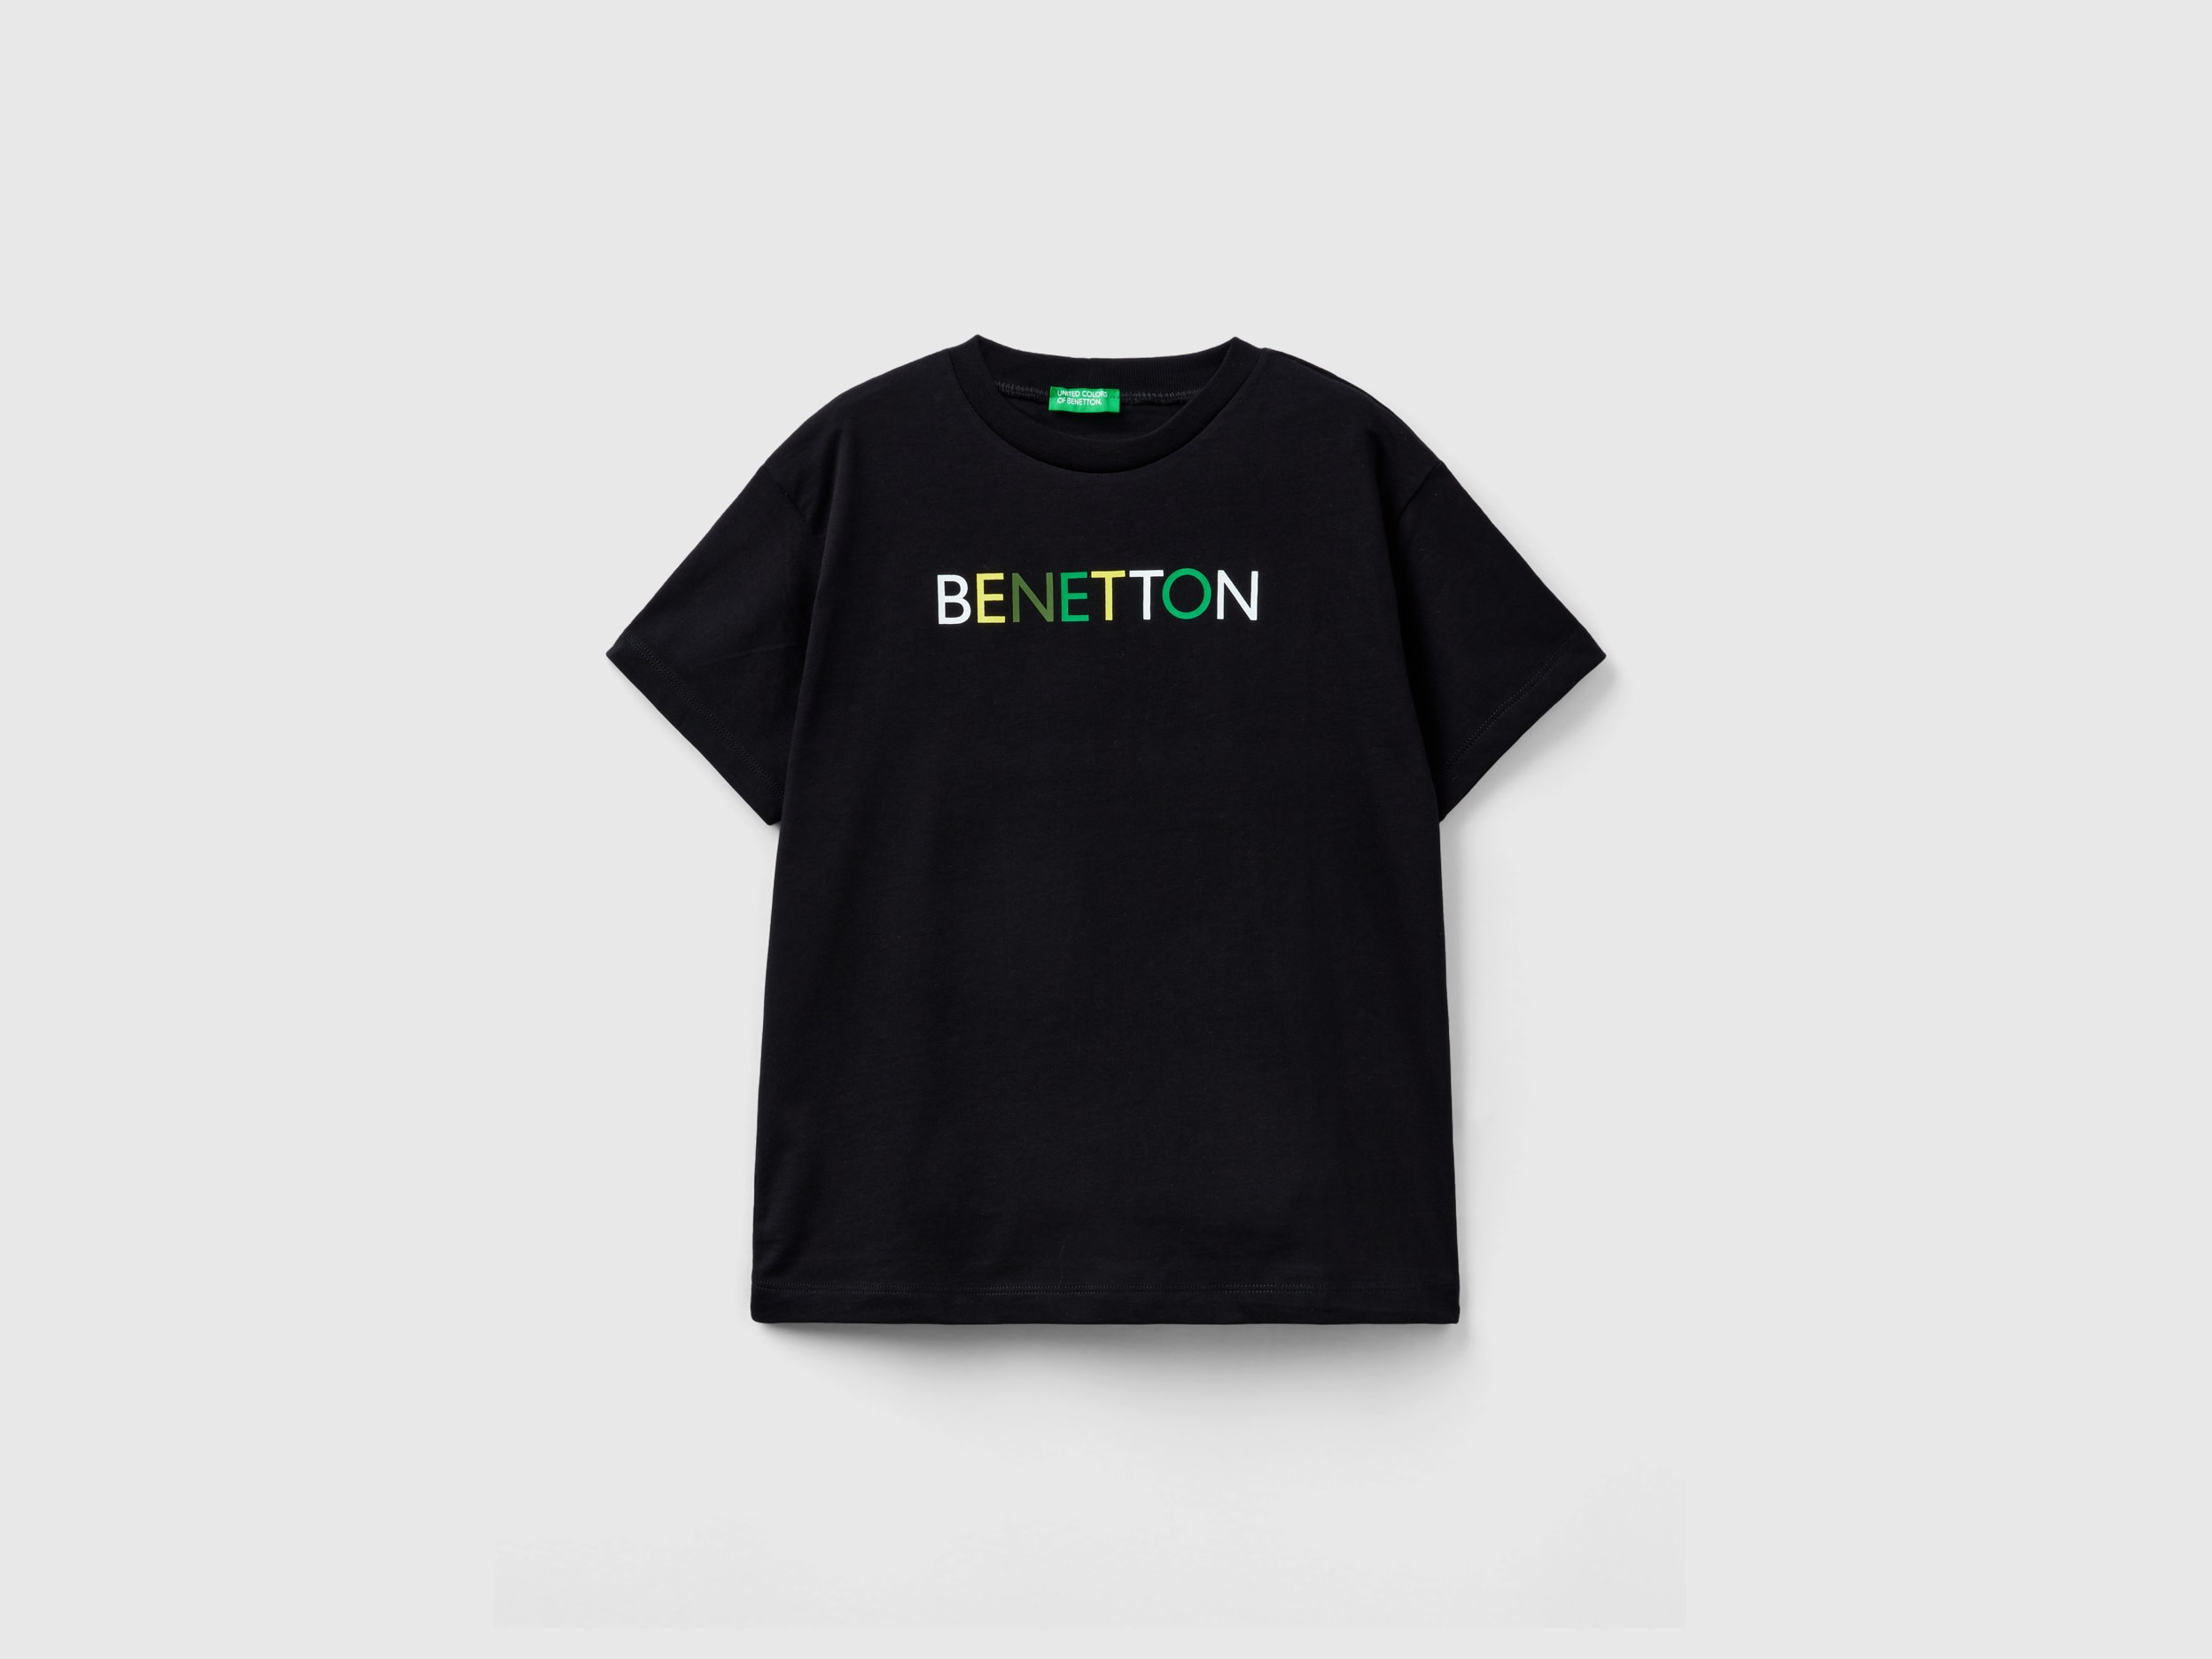 Benetton, 100% Organic Cotton T-shirt, size 3XL, Black, Kids